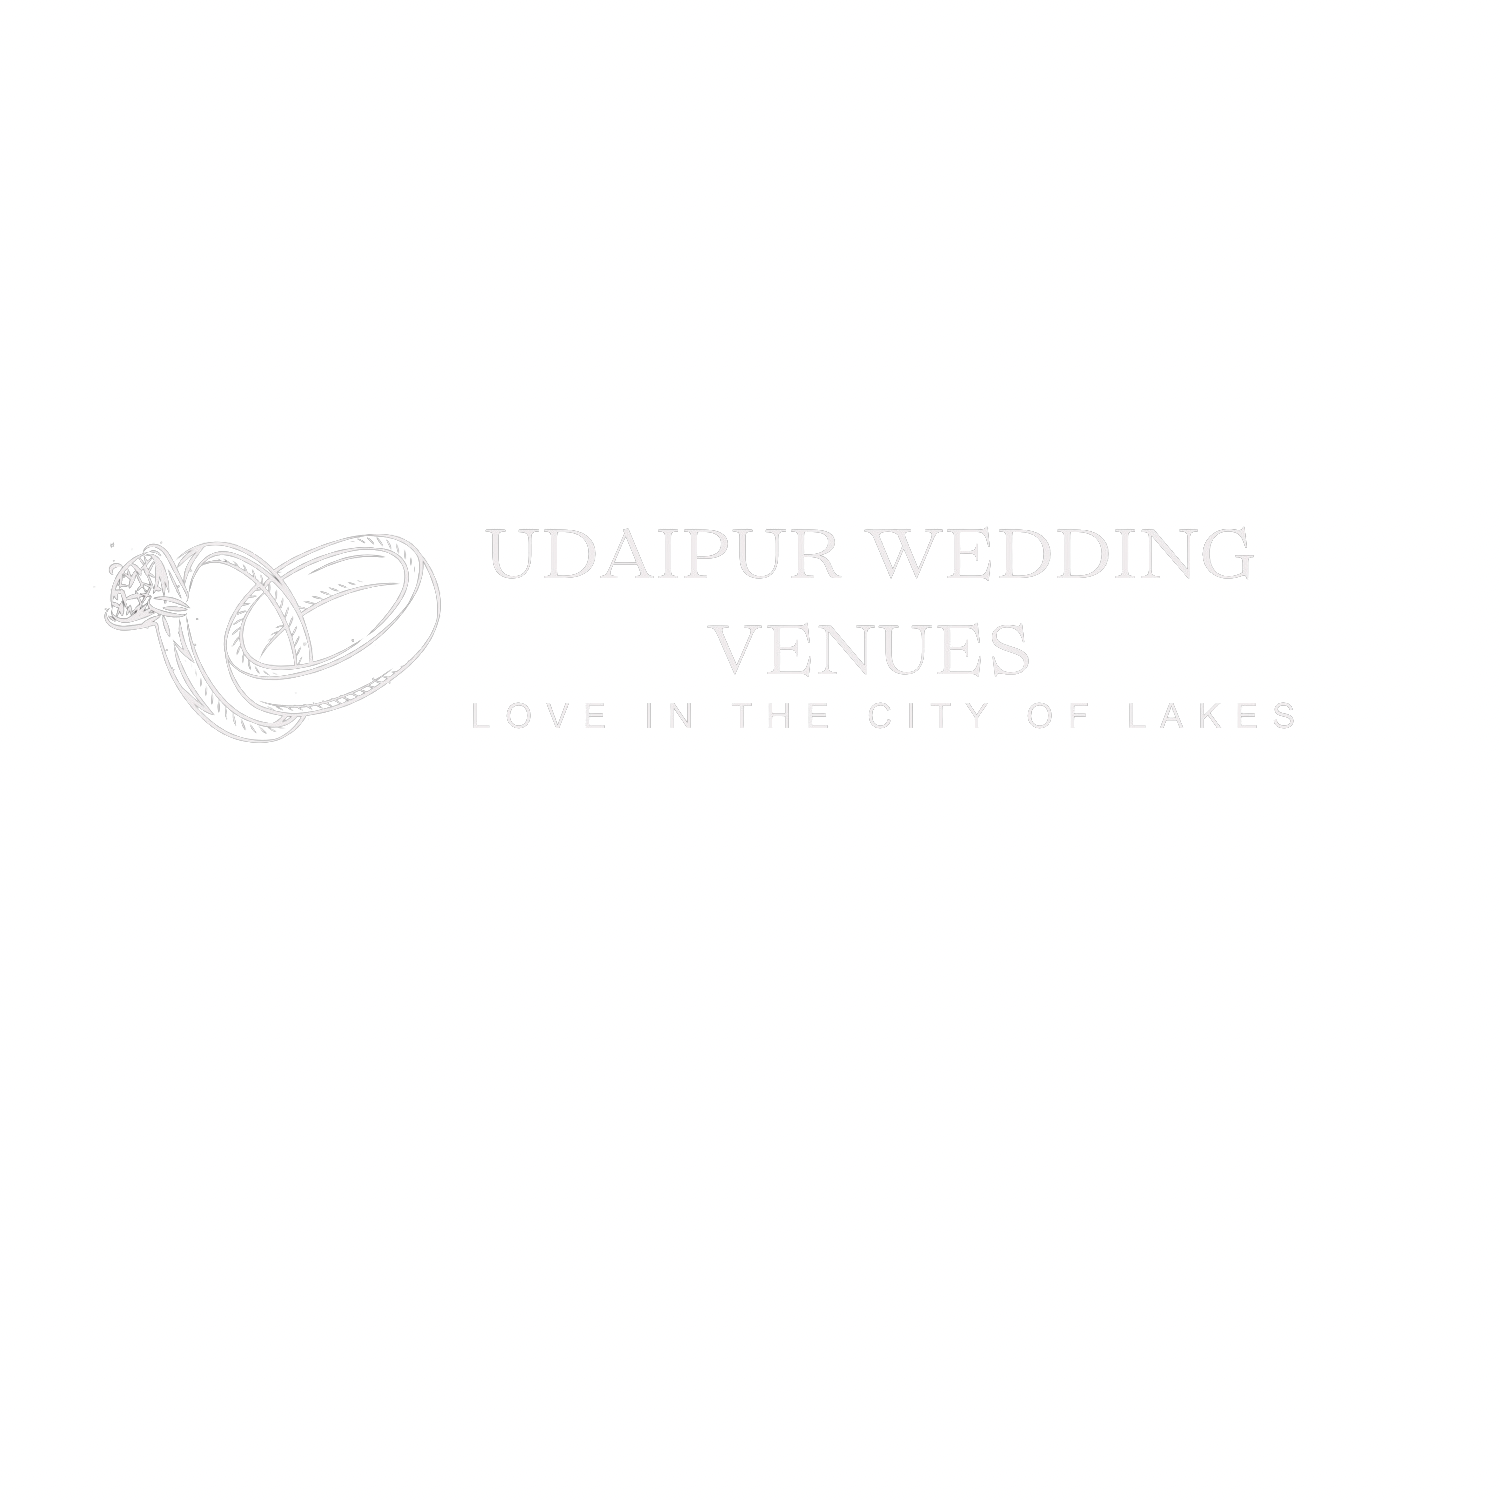 Udaipur Wedding Venues Brand Site Logo